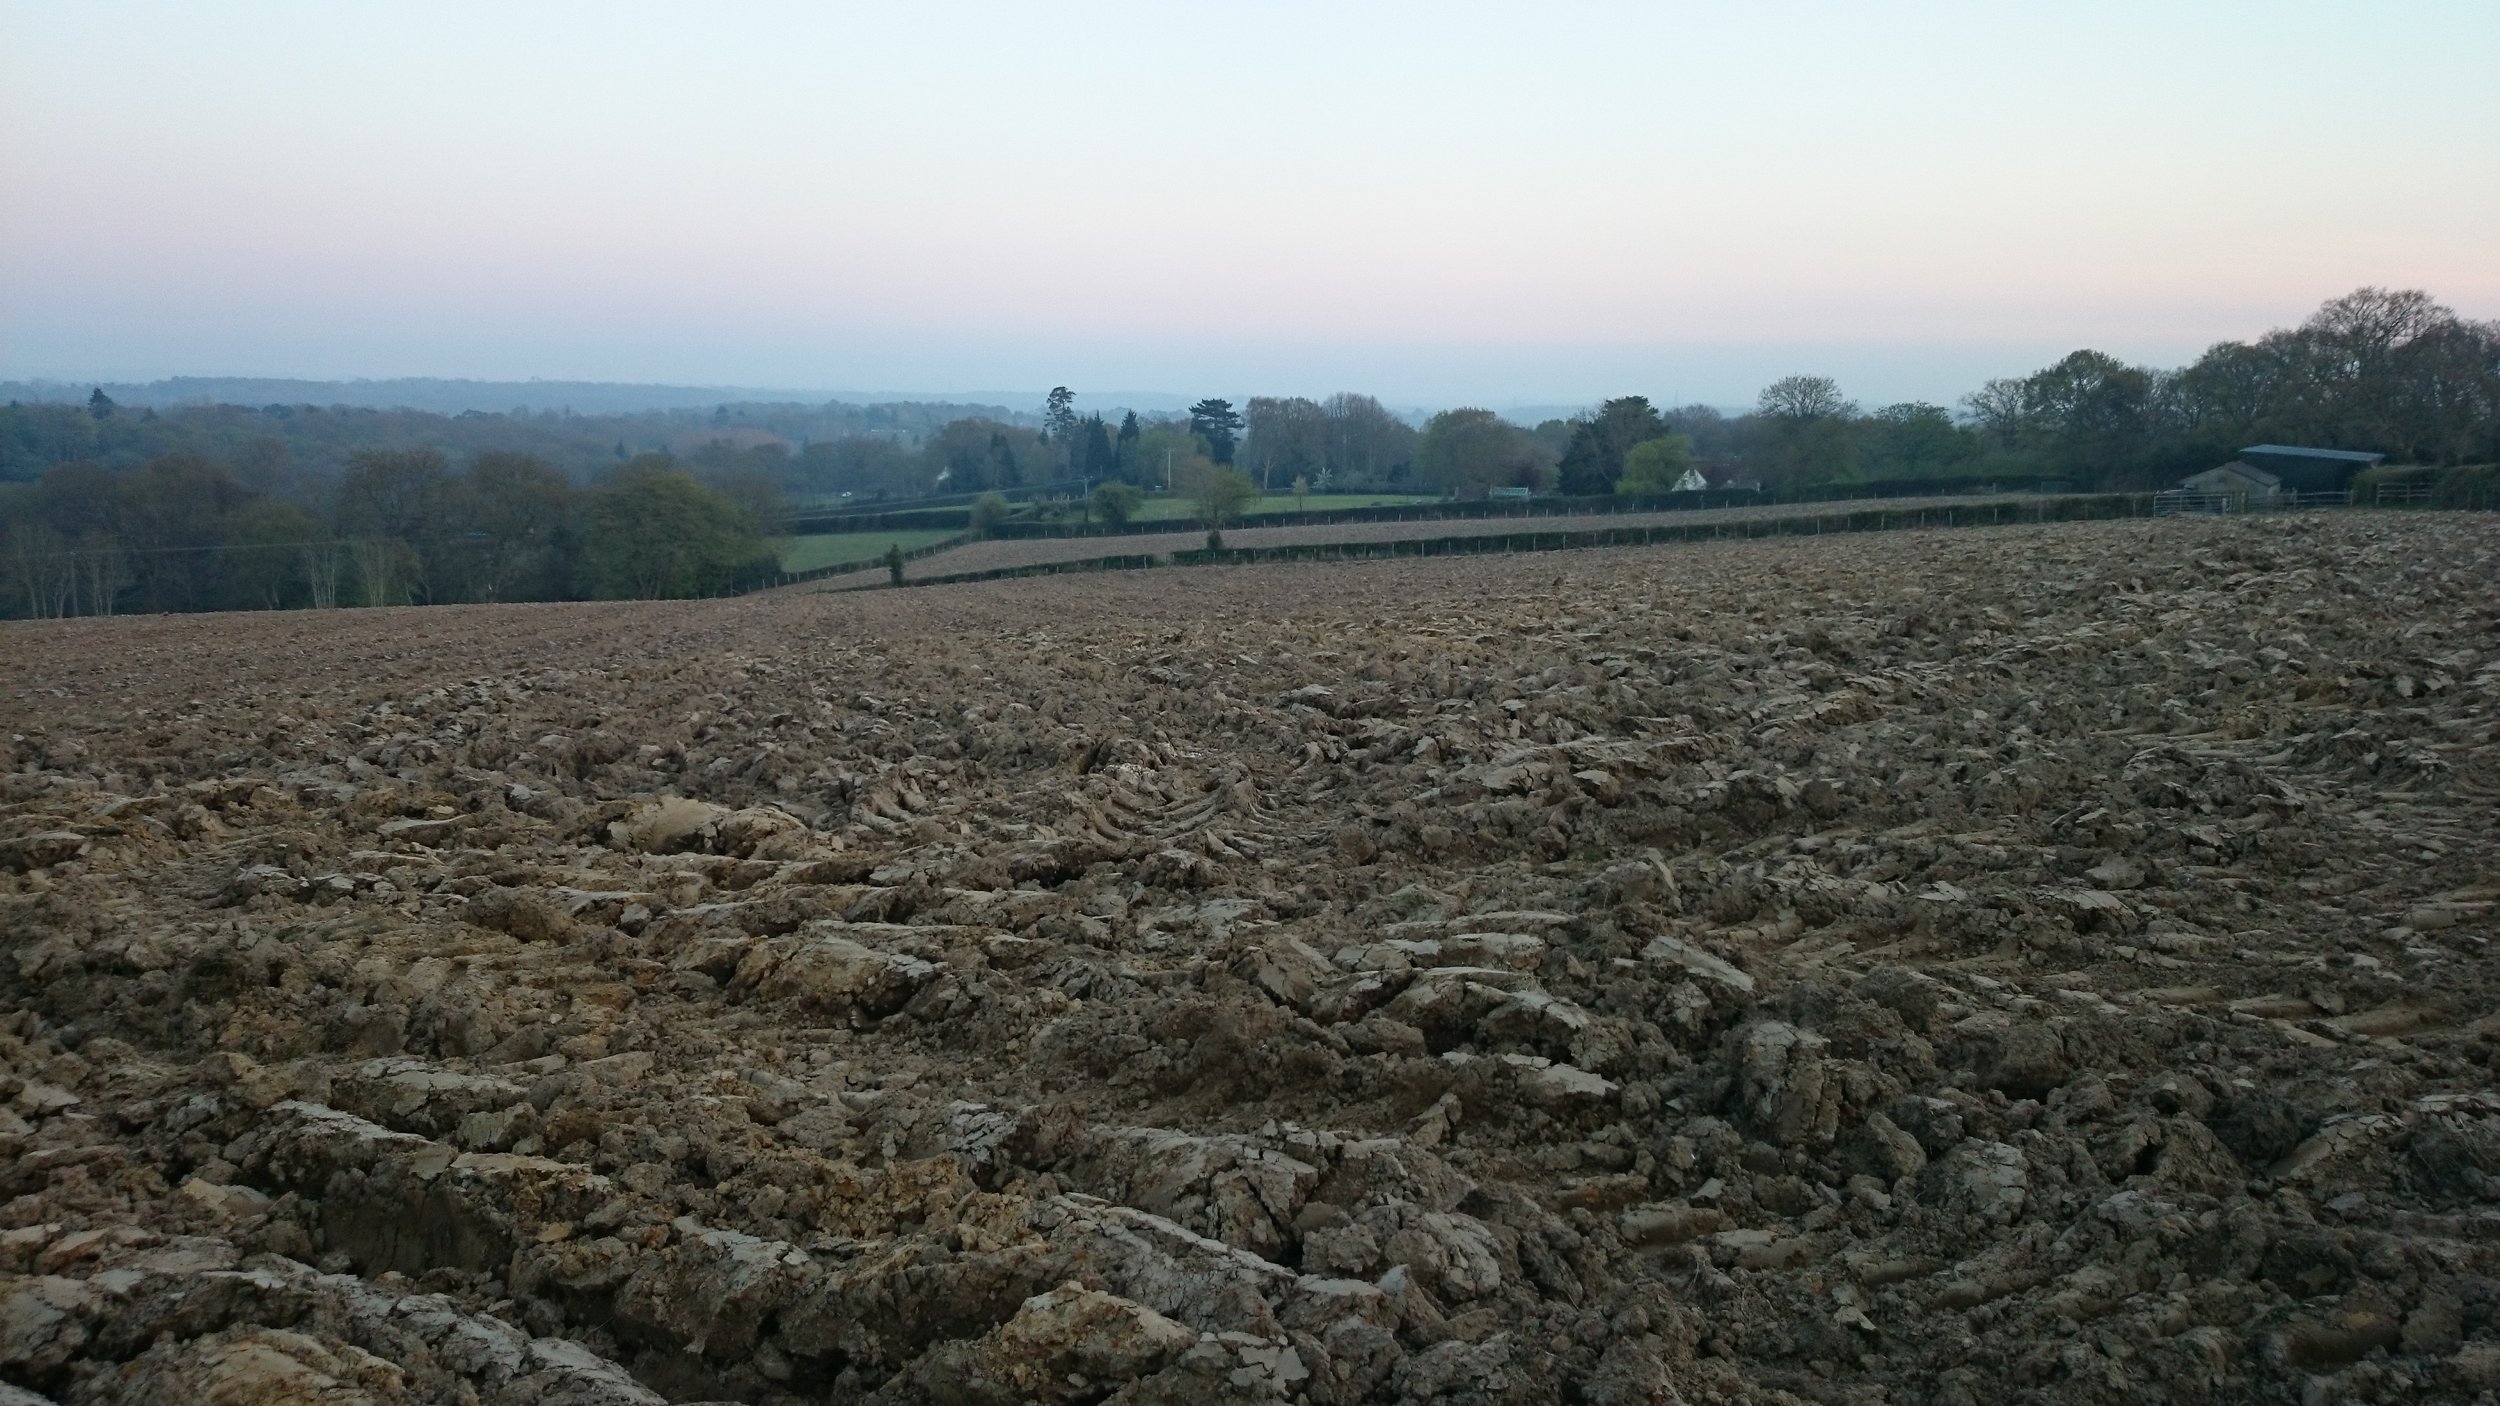 April 2015 - Ploughed for planting